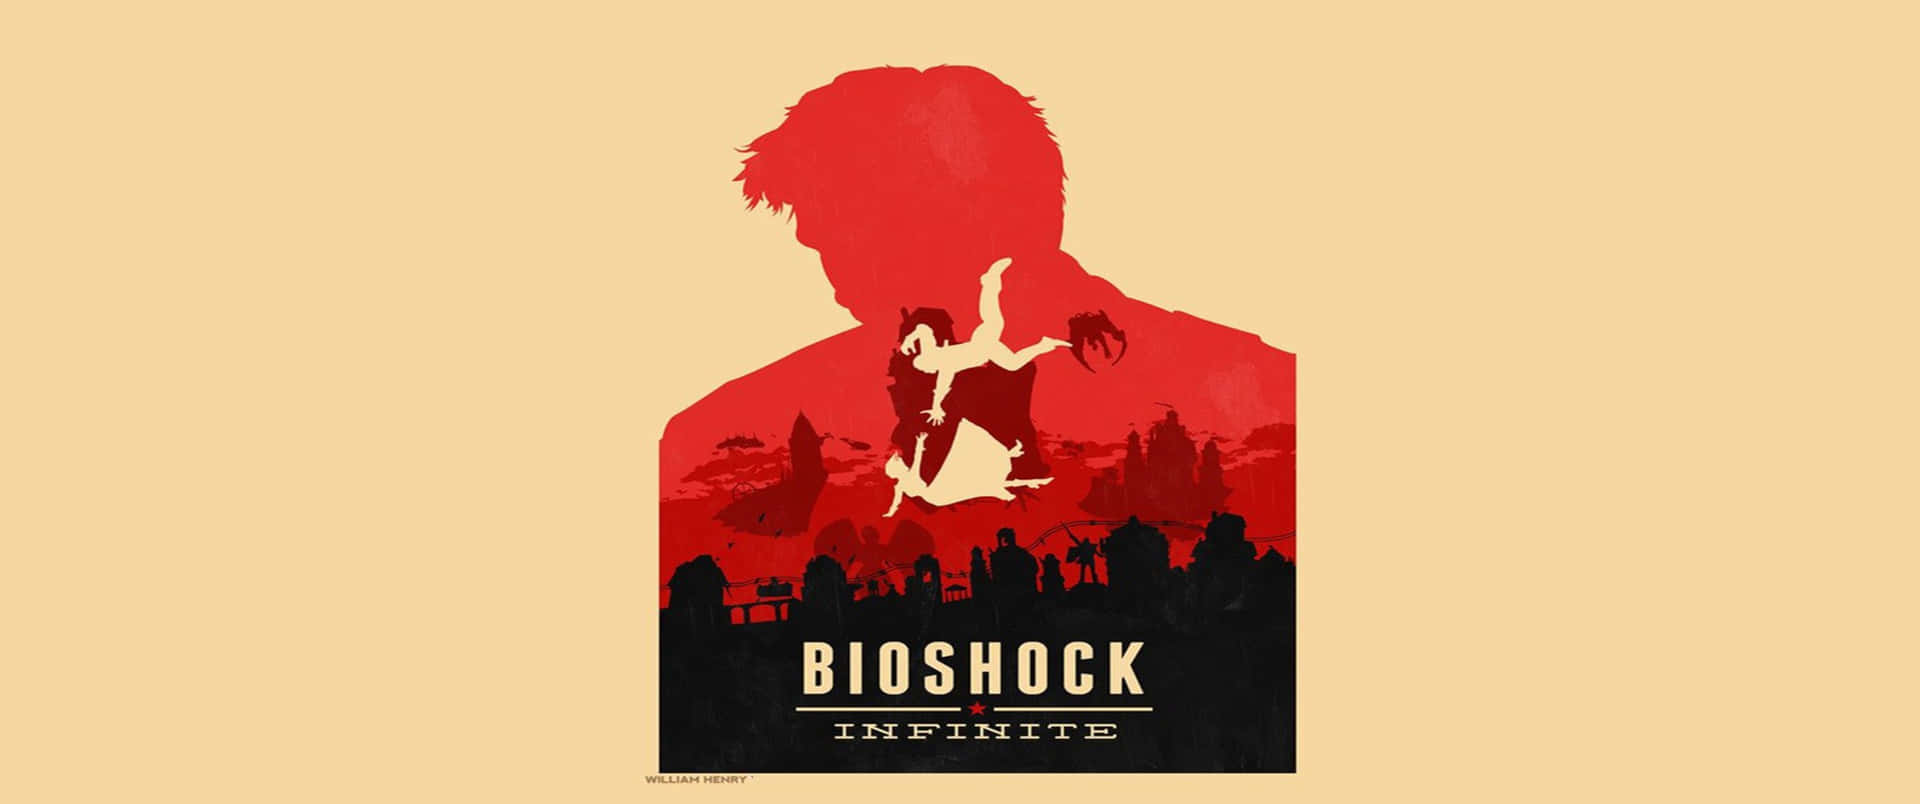 Silhouette Of Booker 3440x1440p Bioshock Infinite Background